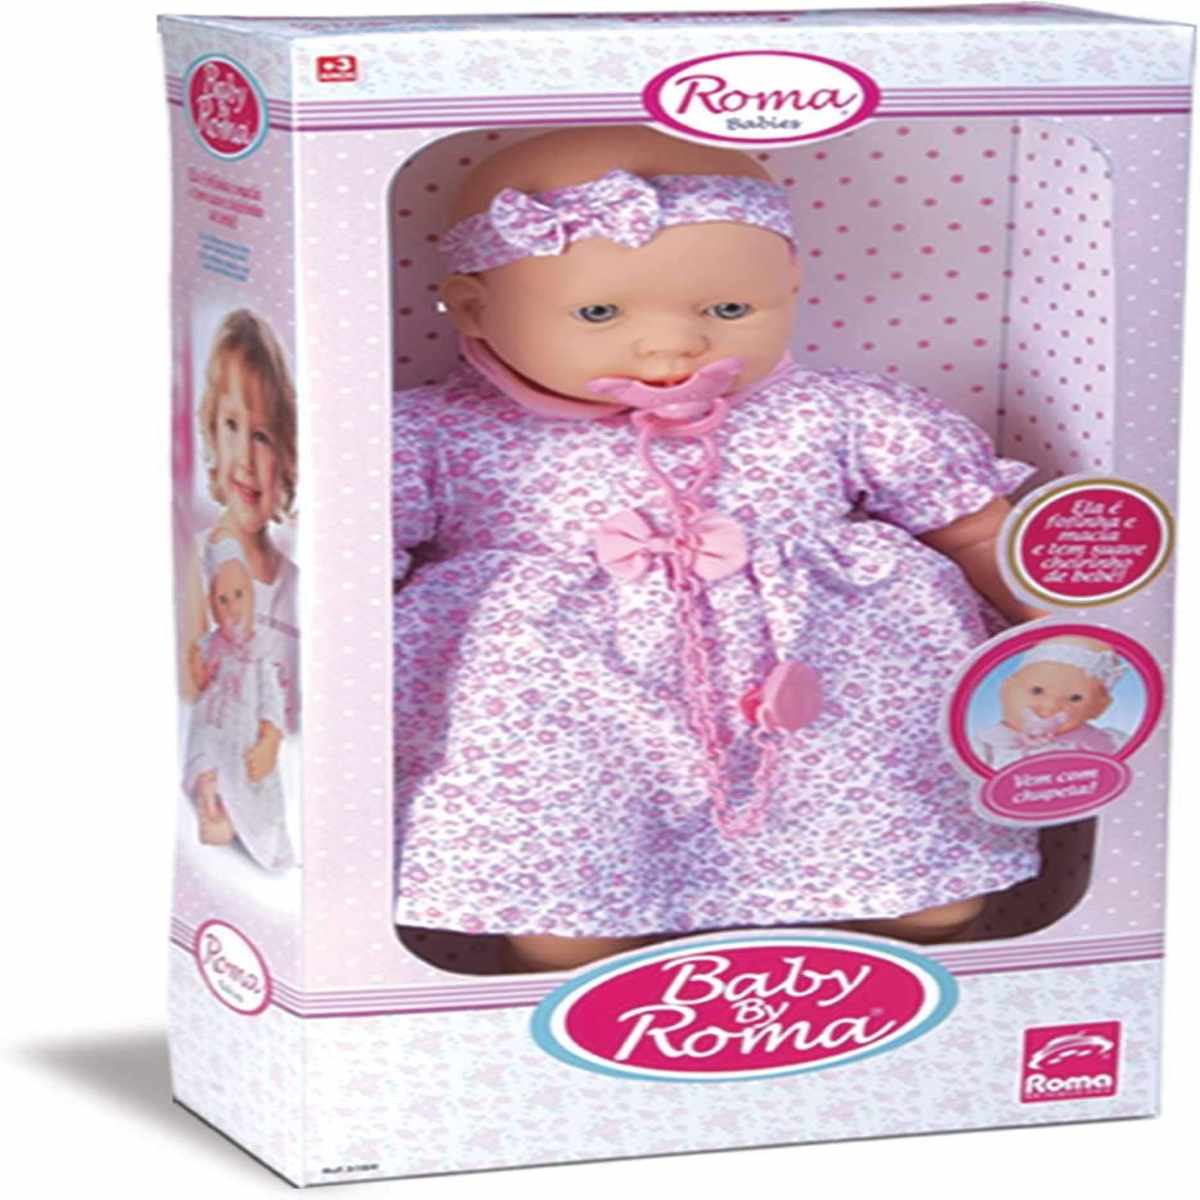 boneca-baby-com-tiara-roma-jensen-1.jpg